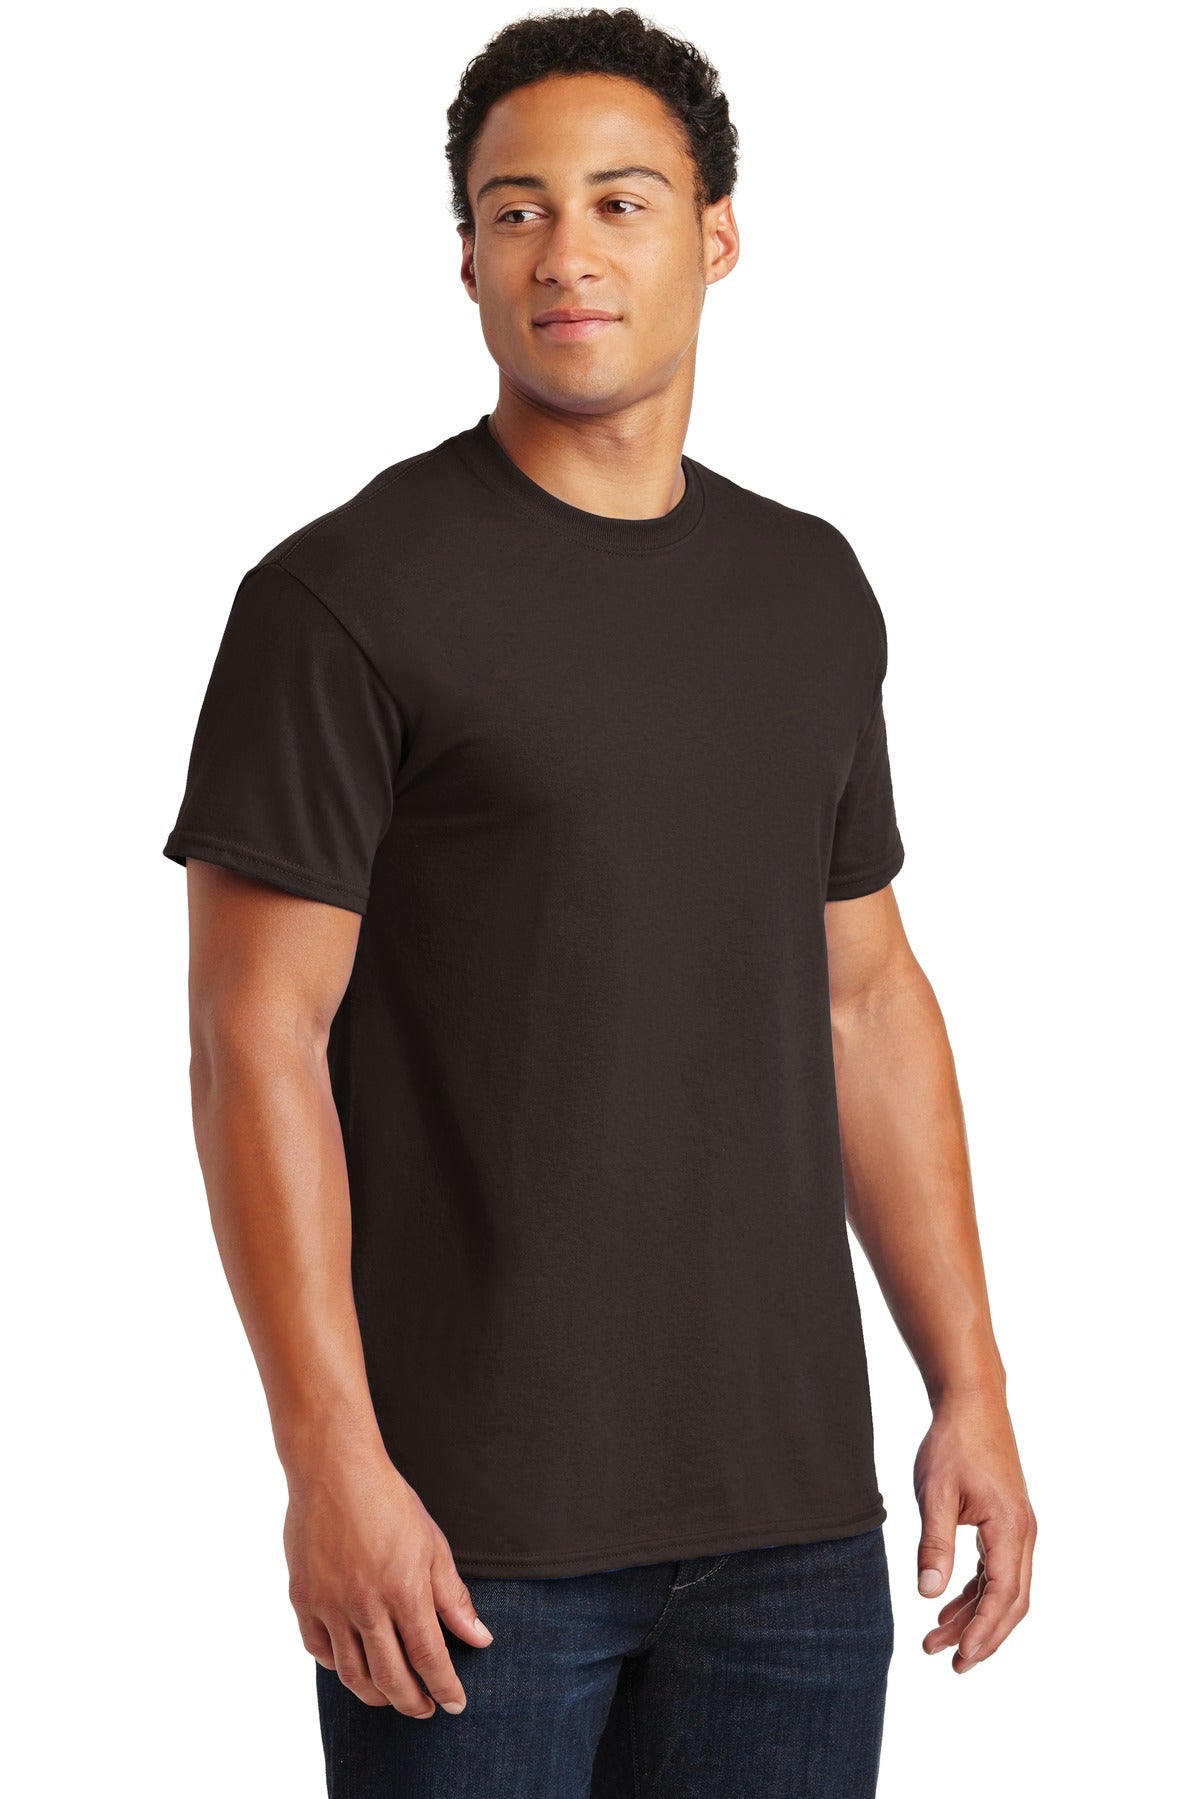 Gildan - Ultra Cotton 100% US Cotton T-Shirt. 2000 - Dark Chocolate